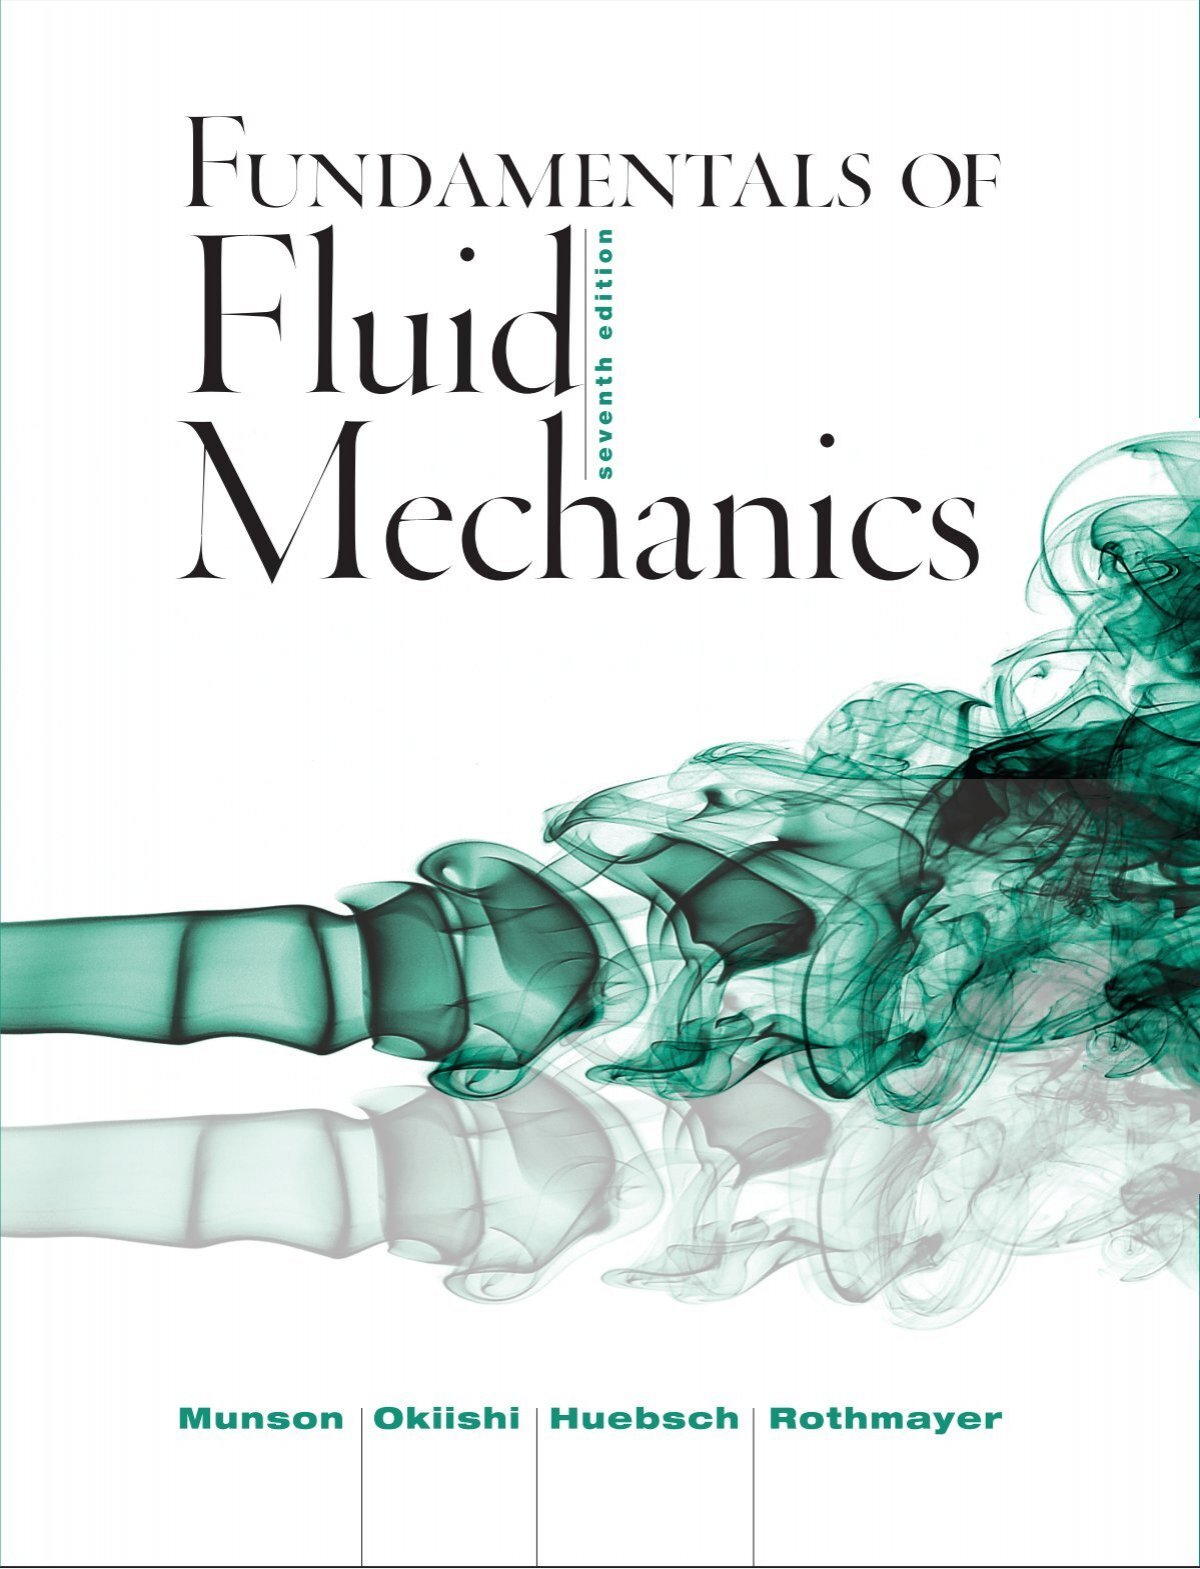 Chapter 6: Aerodynamics: Homemade vacuum pump and water pump